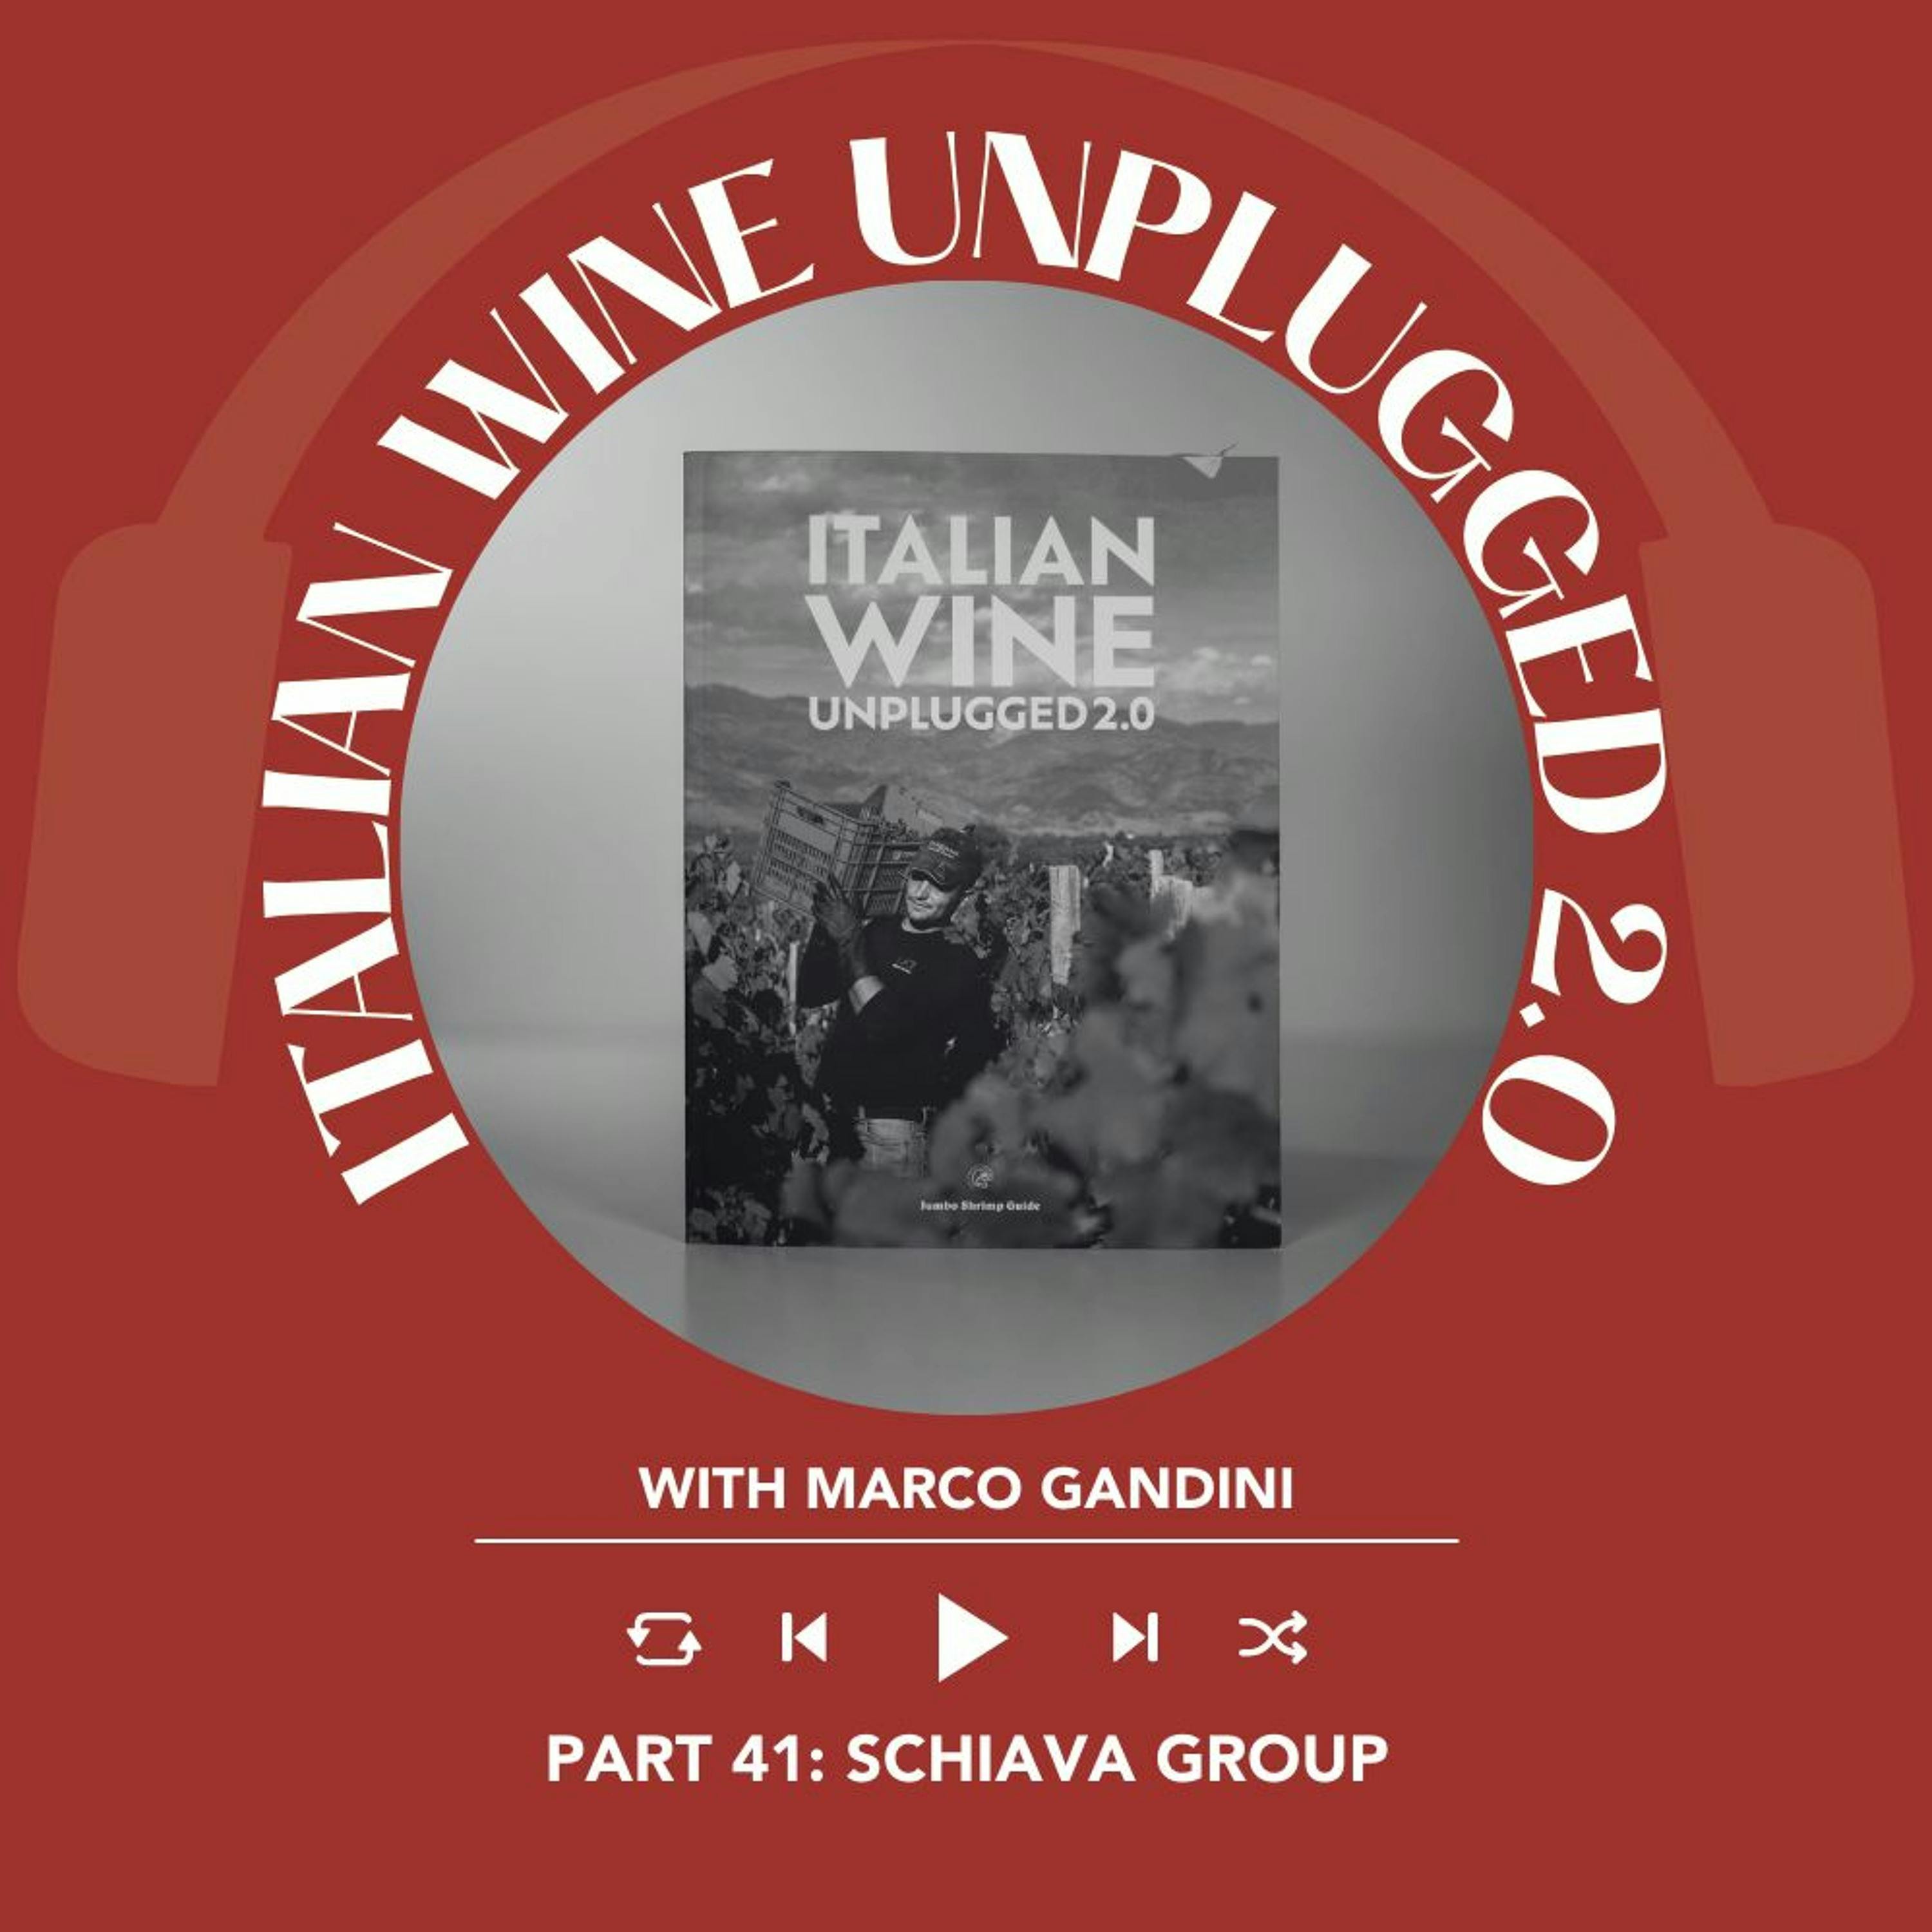 Ep. 1632 Marco Gandini Narrates Pt. 41 | Italian Wine Unplugged 2.0